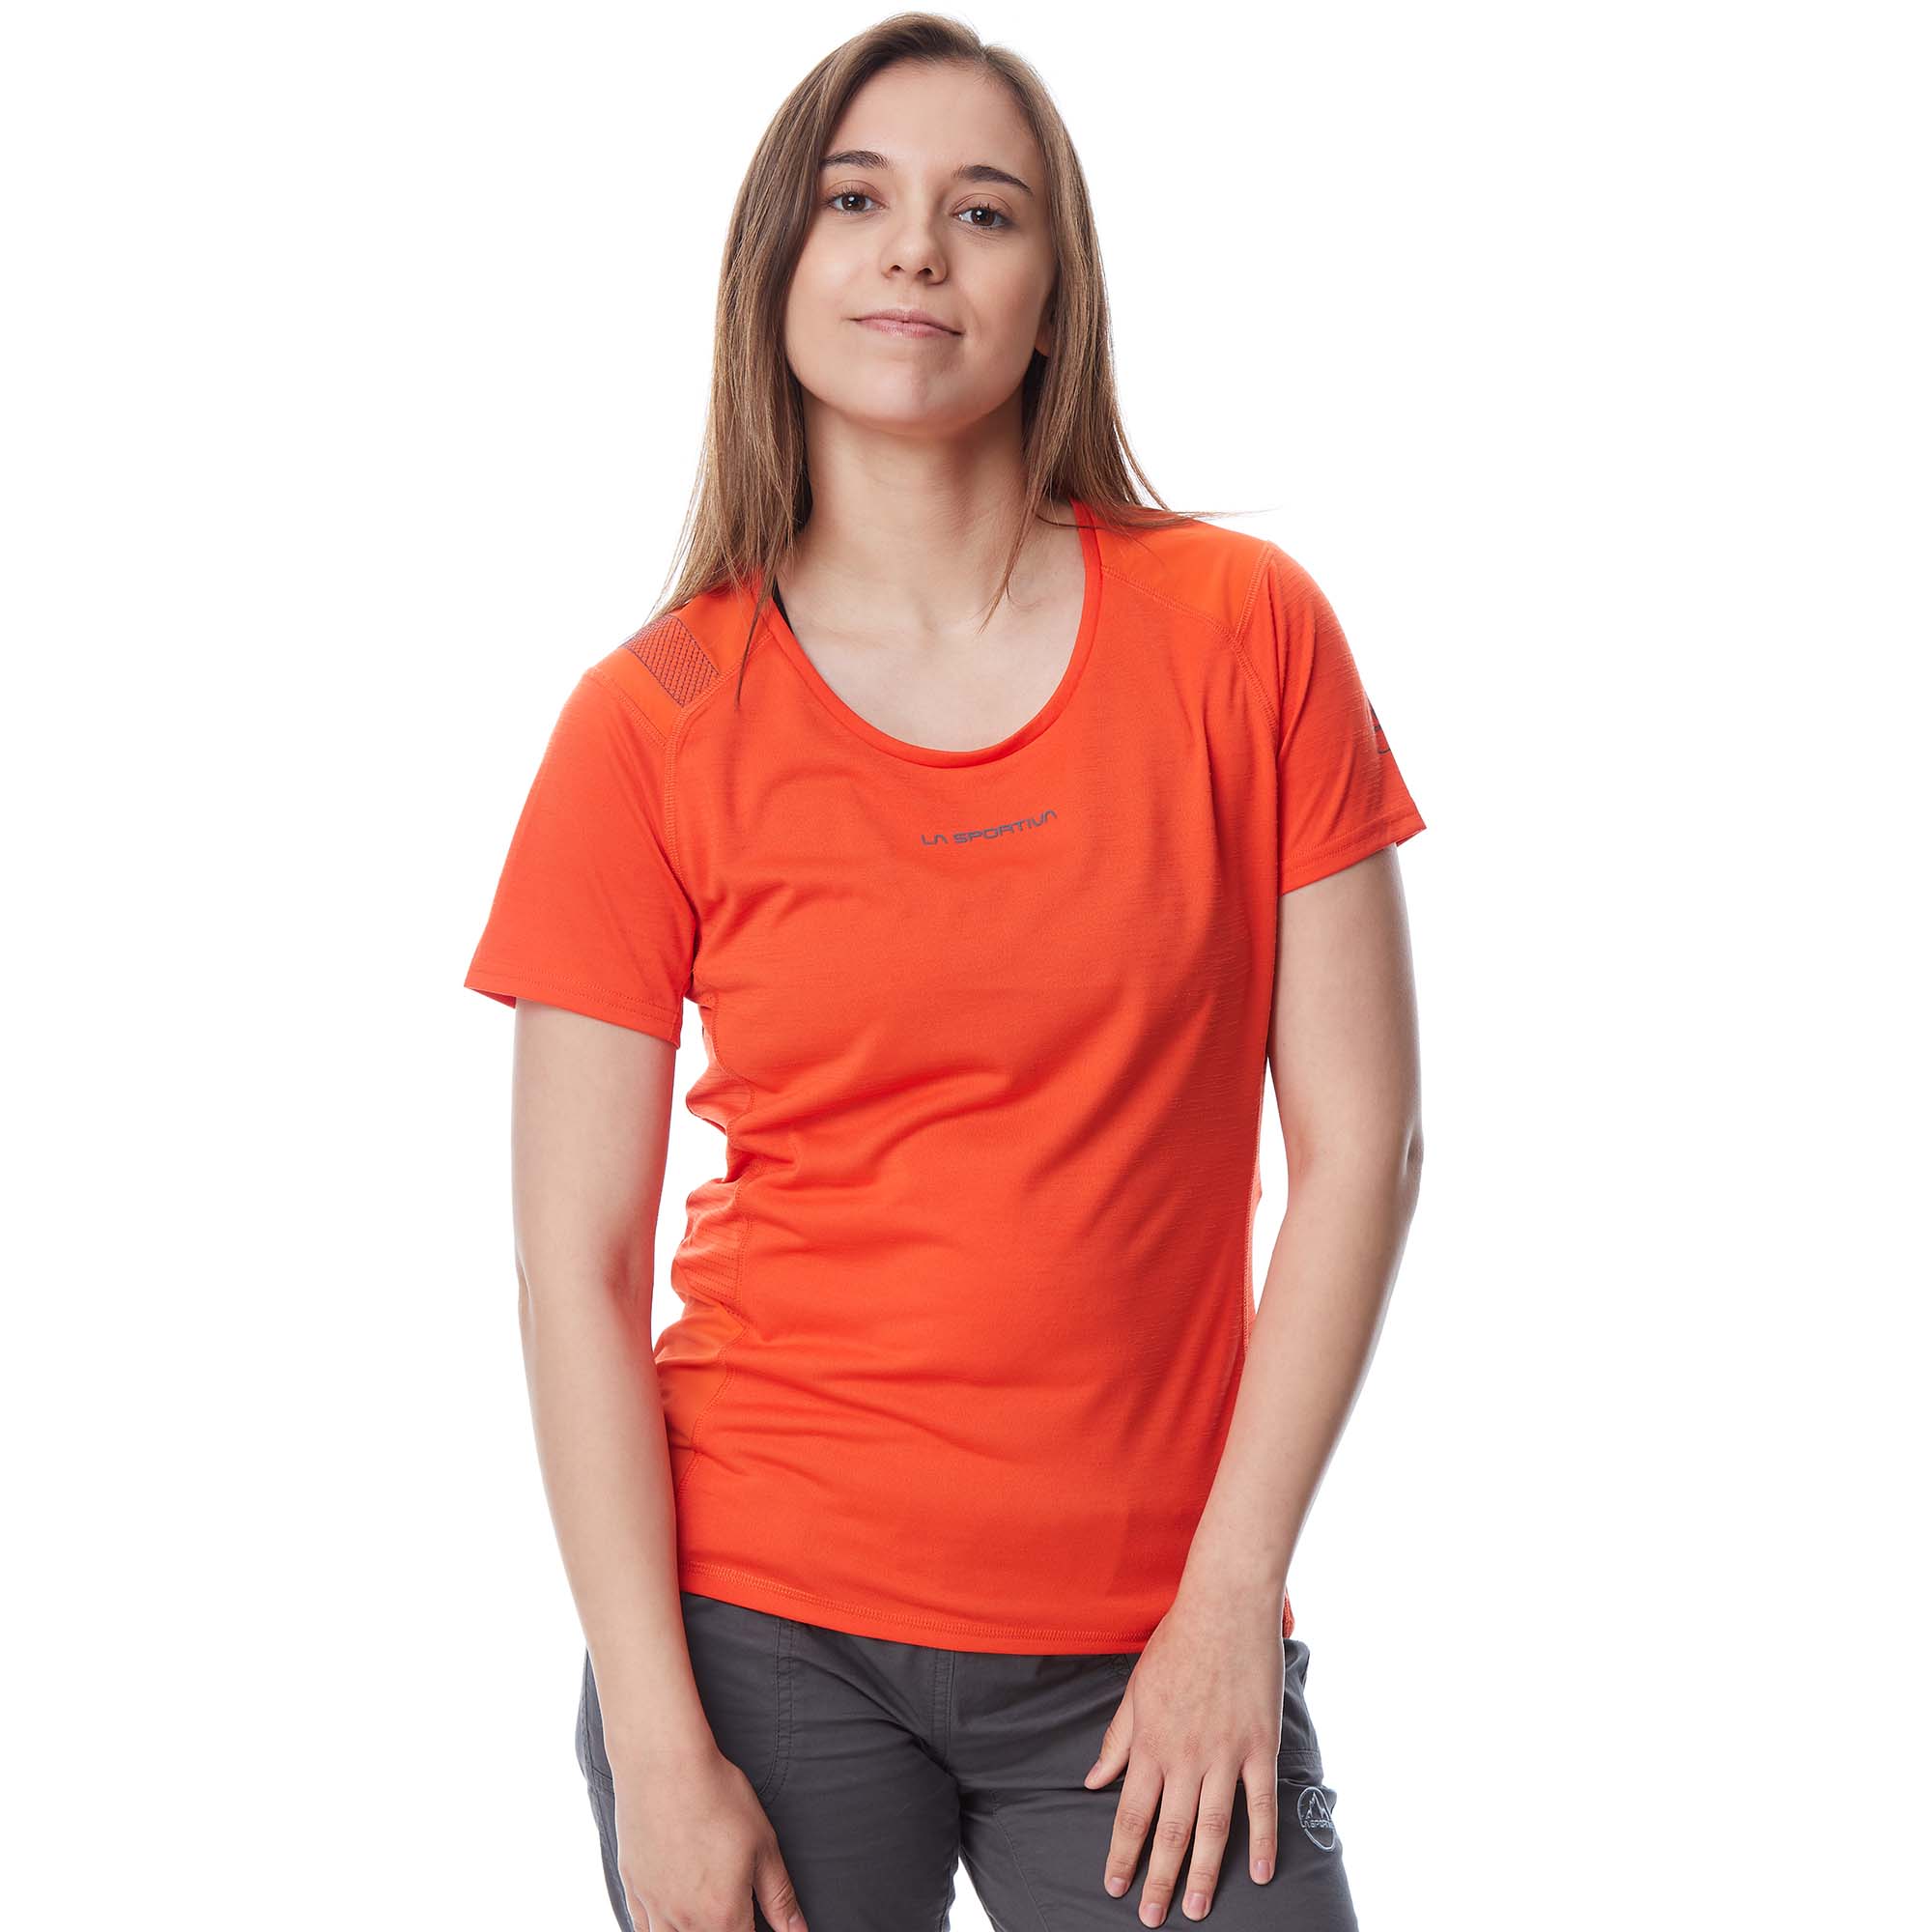 La Sportiva Compass Women's Technical T-Shirt